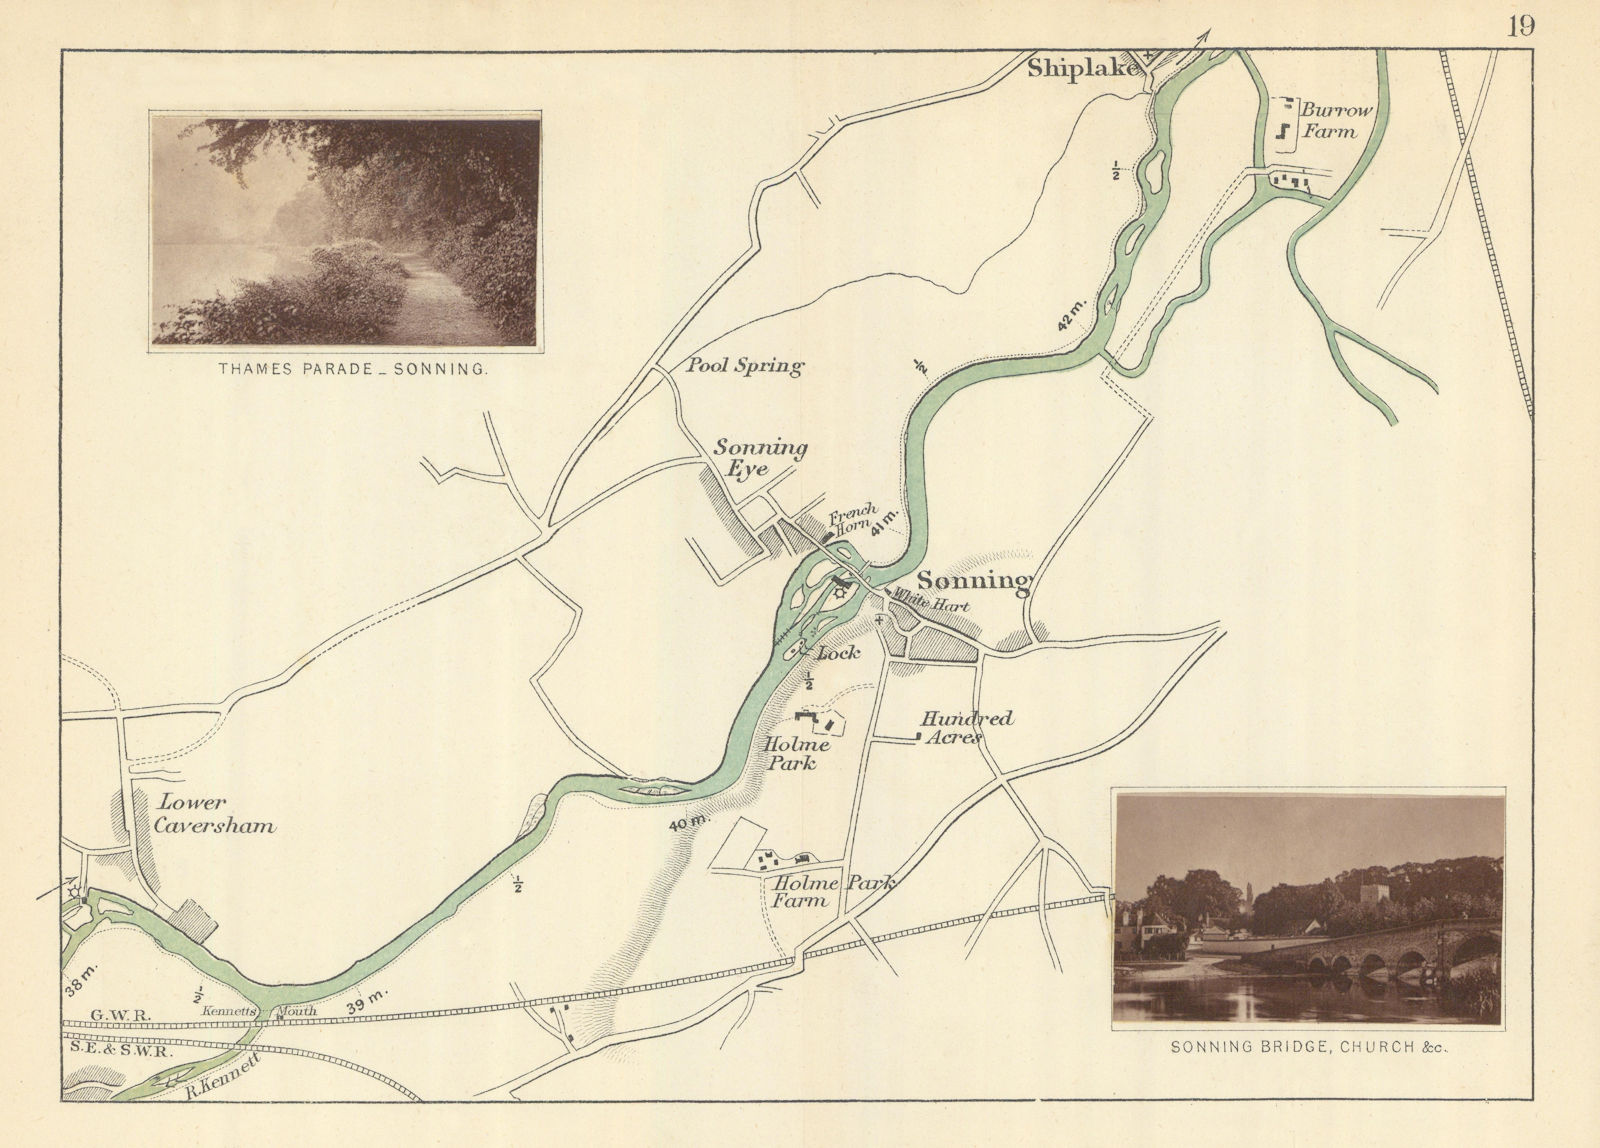 RIVER THAMES Lower Caversham - Sonning - Shiplake. Thames Parade. TAUNT 1879 map